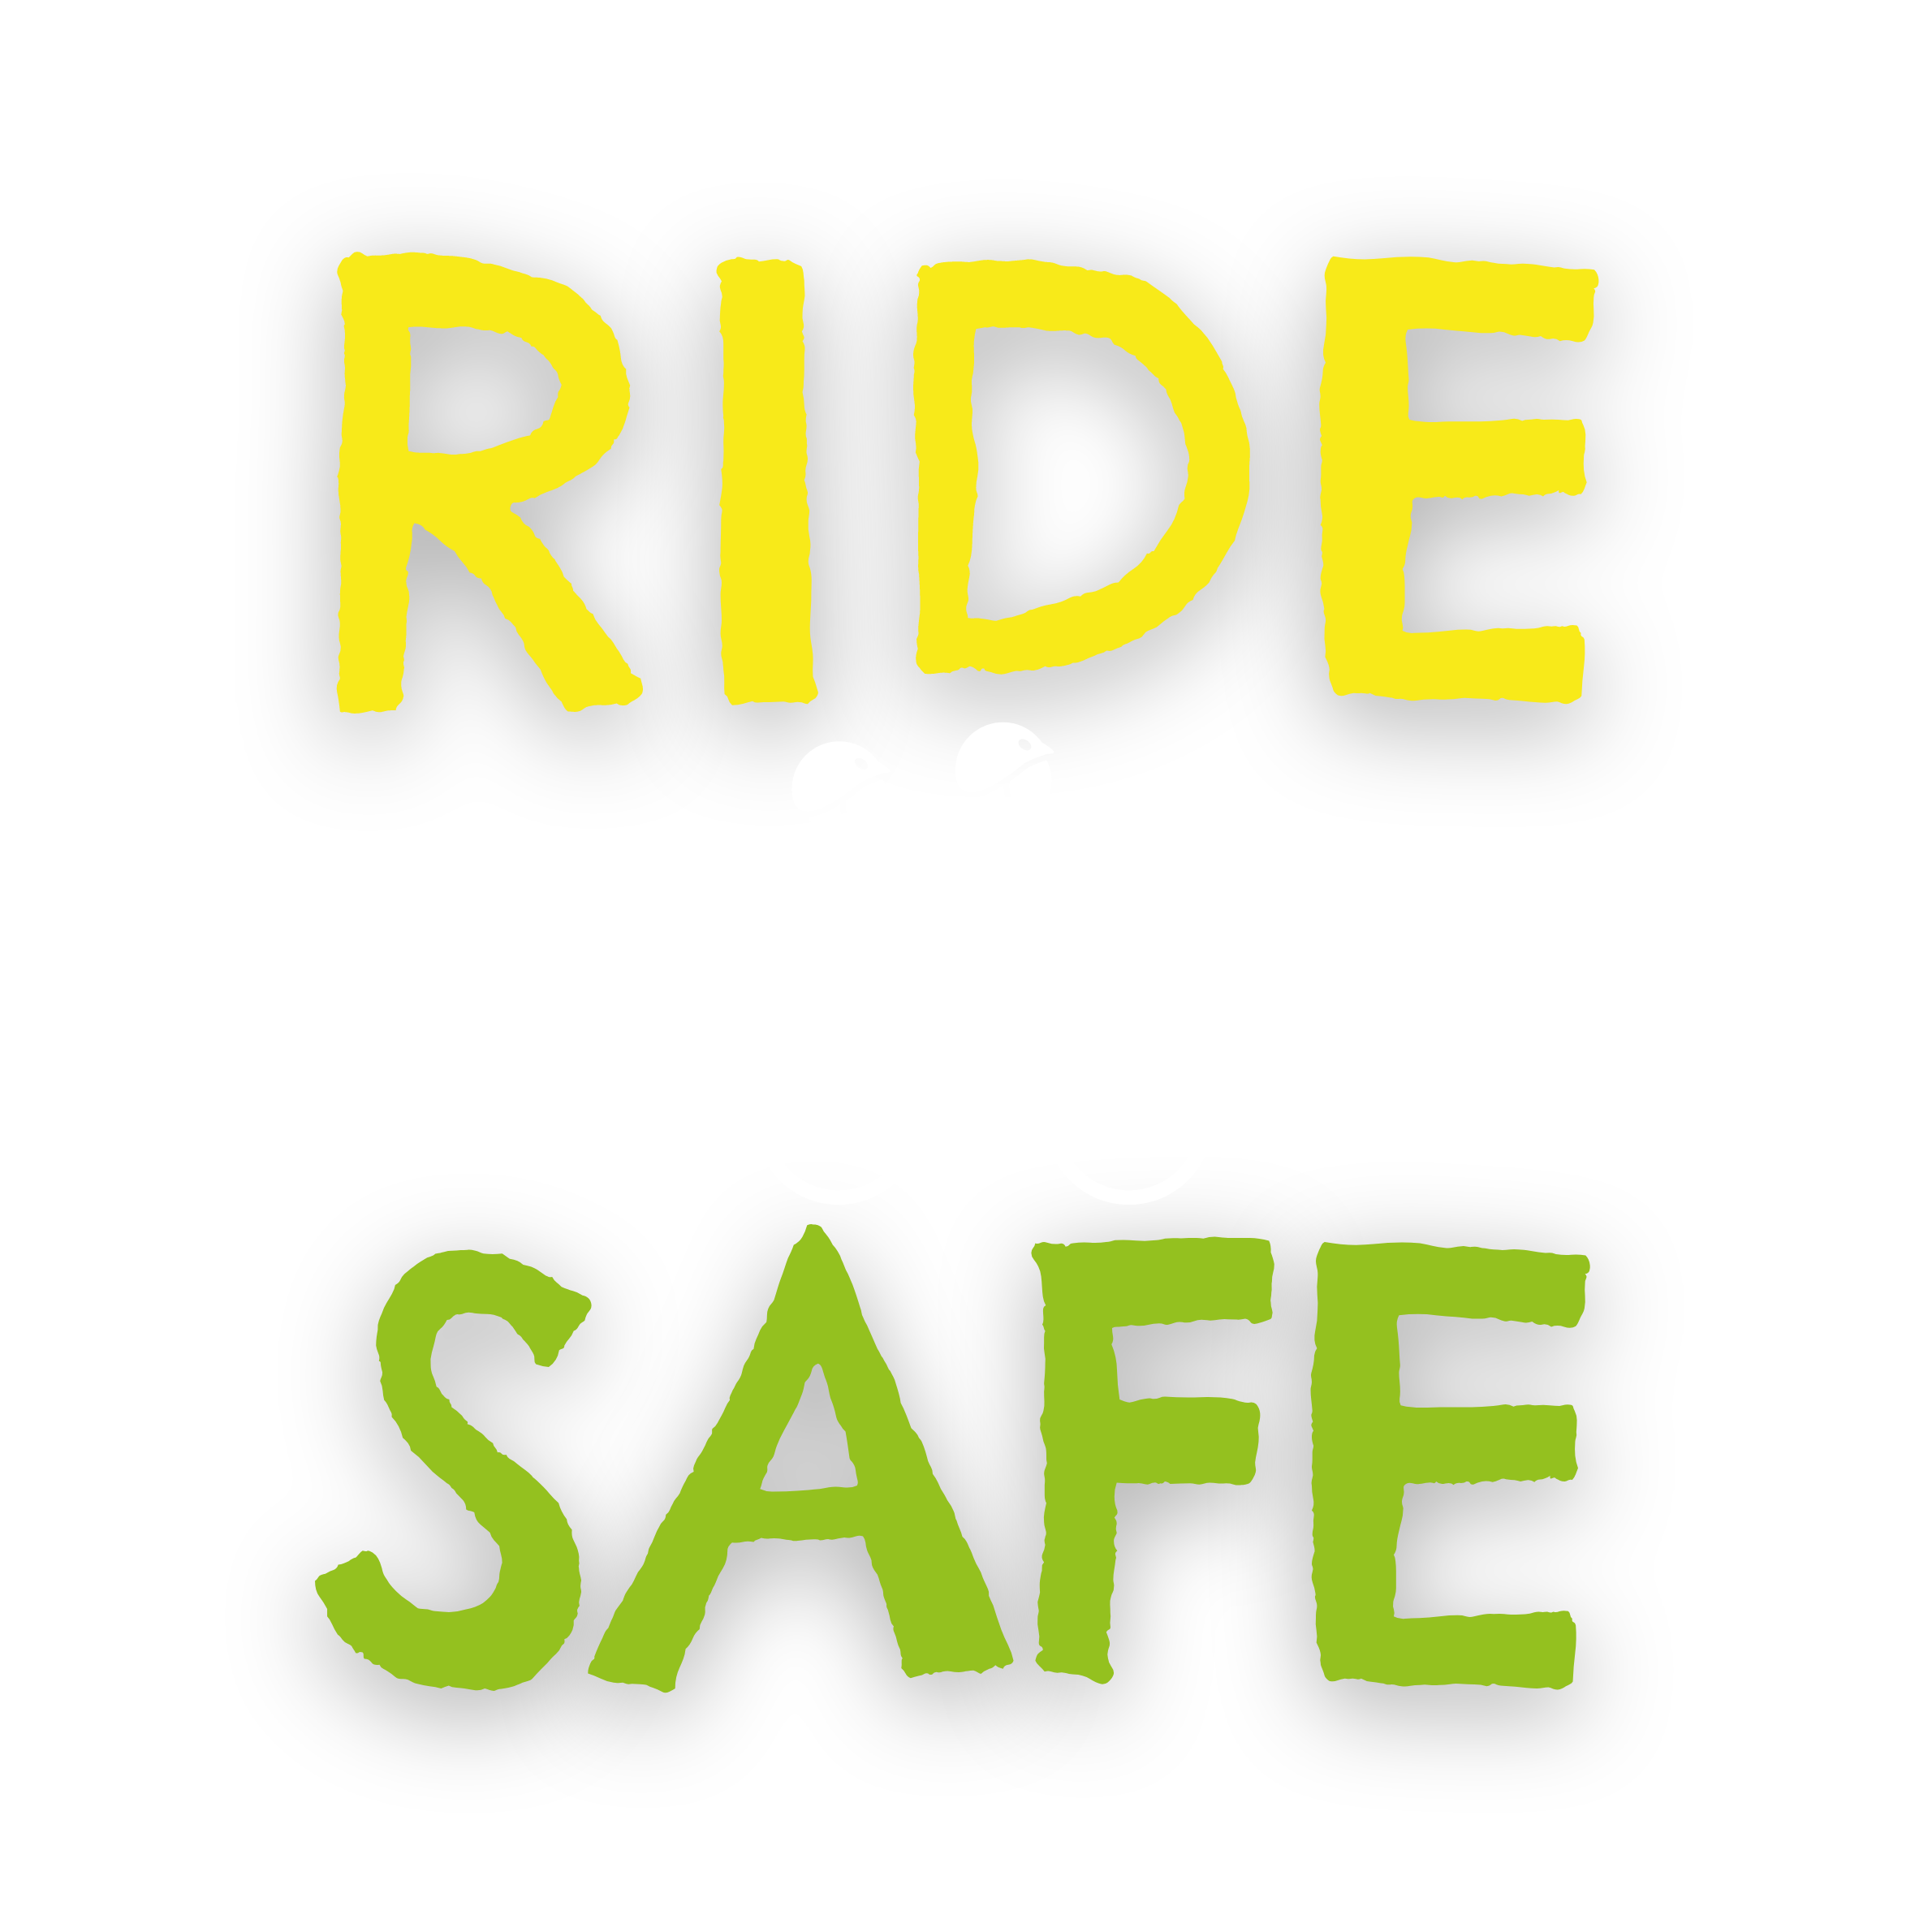 RIDE SAFE logo